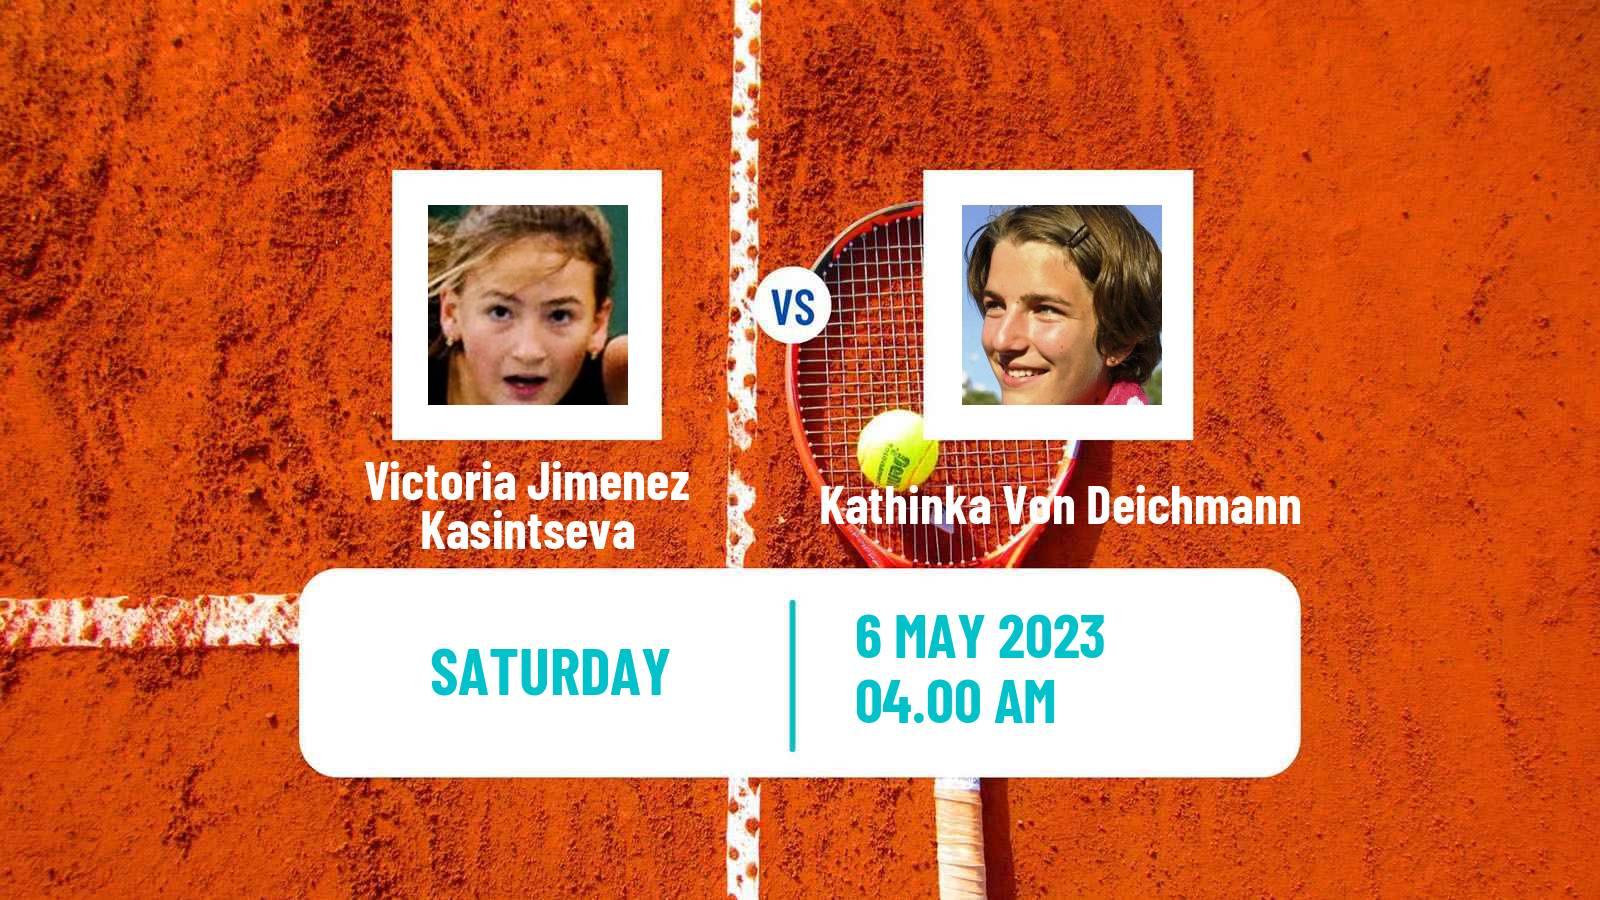 Tennis ITF Tournaments Victoria Jimenez Kasintseva - Kathinka Von Deichmann